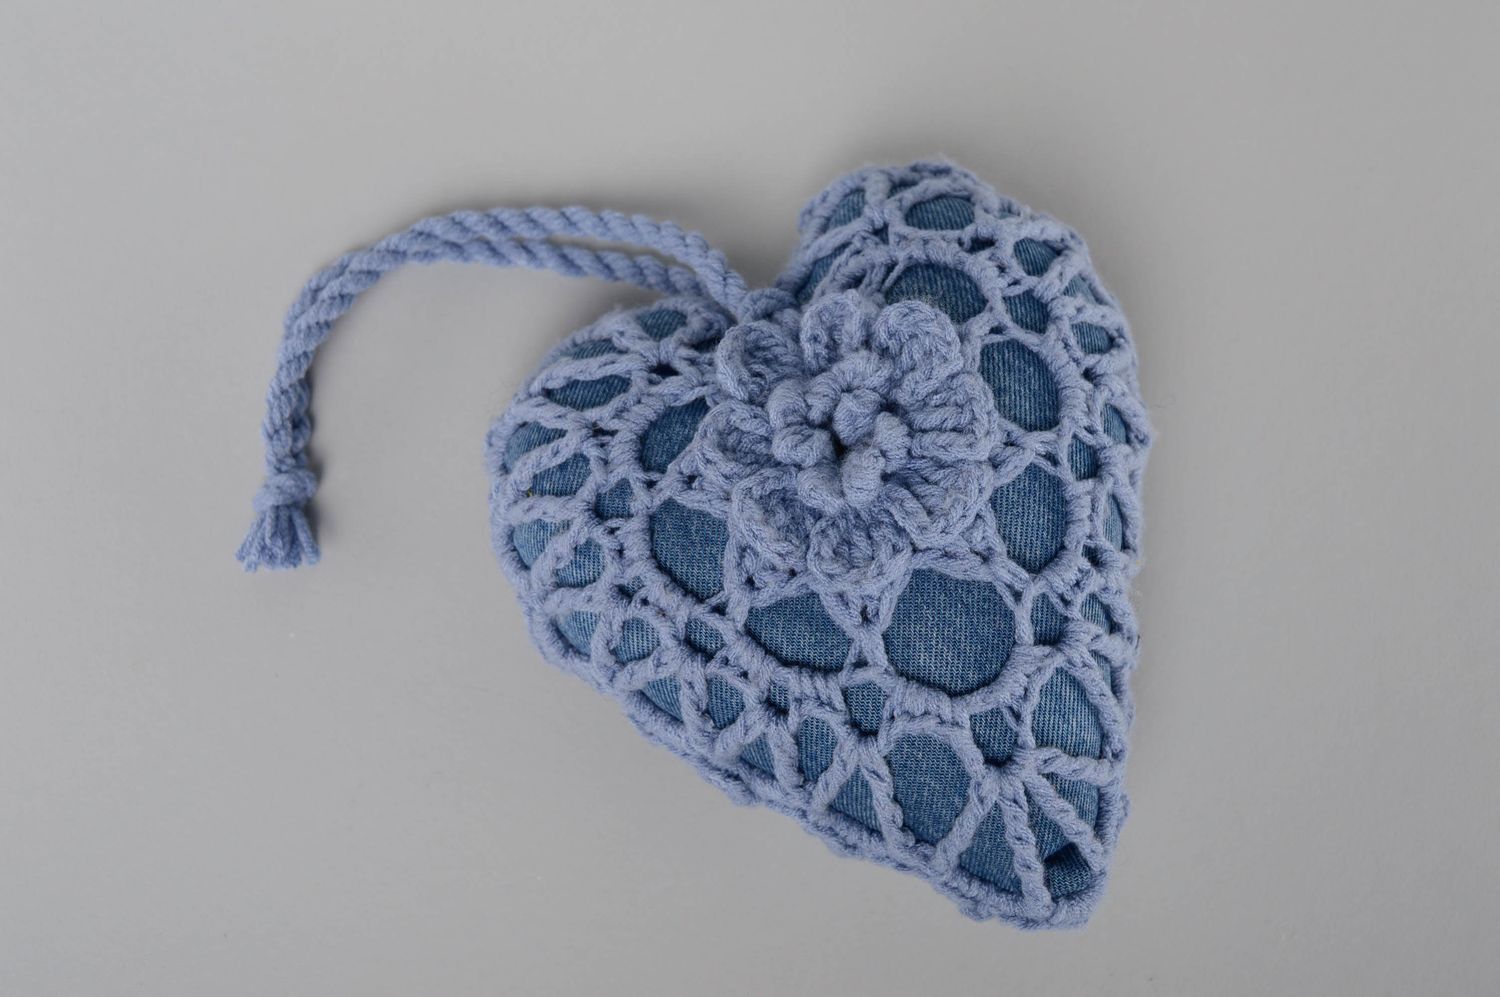 Handmade crochet interior pendant Blue Heart photo 1